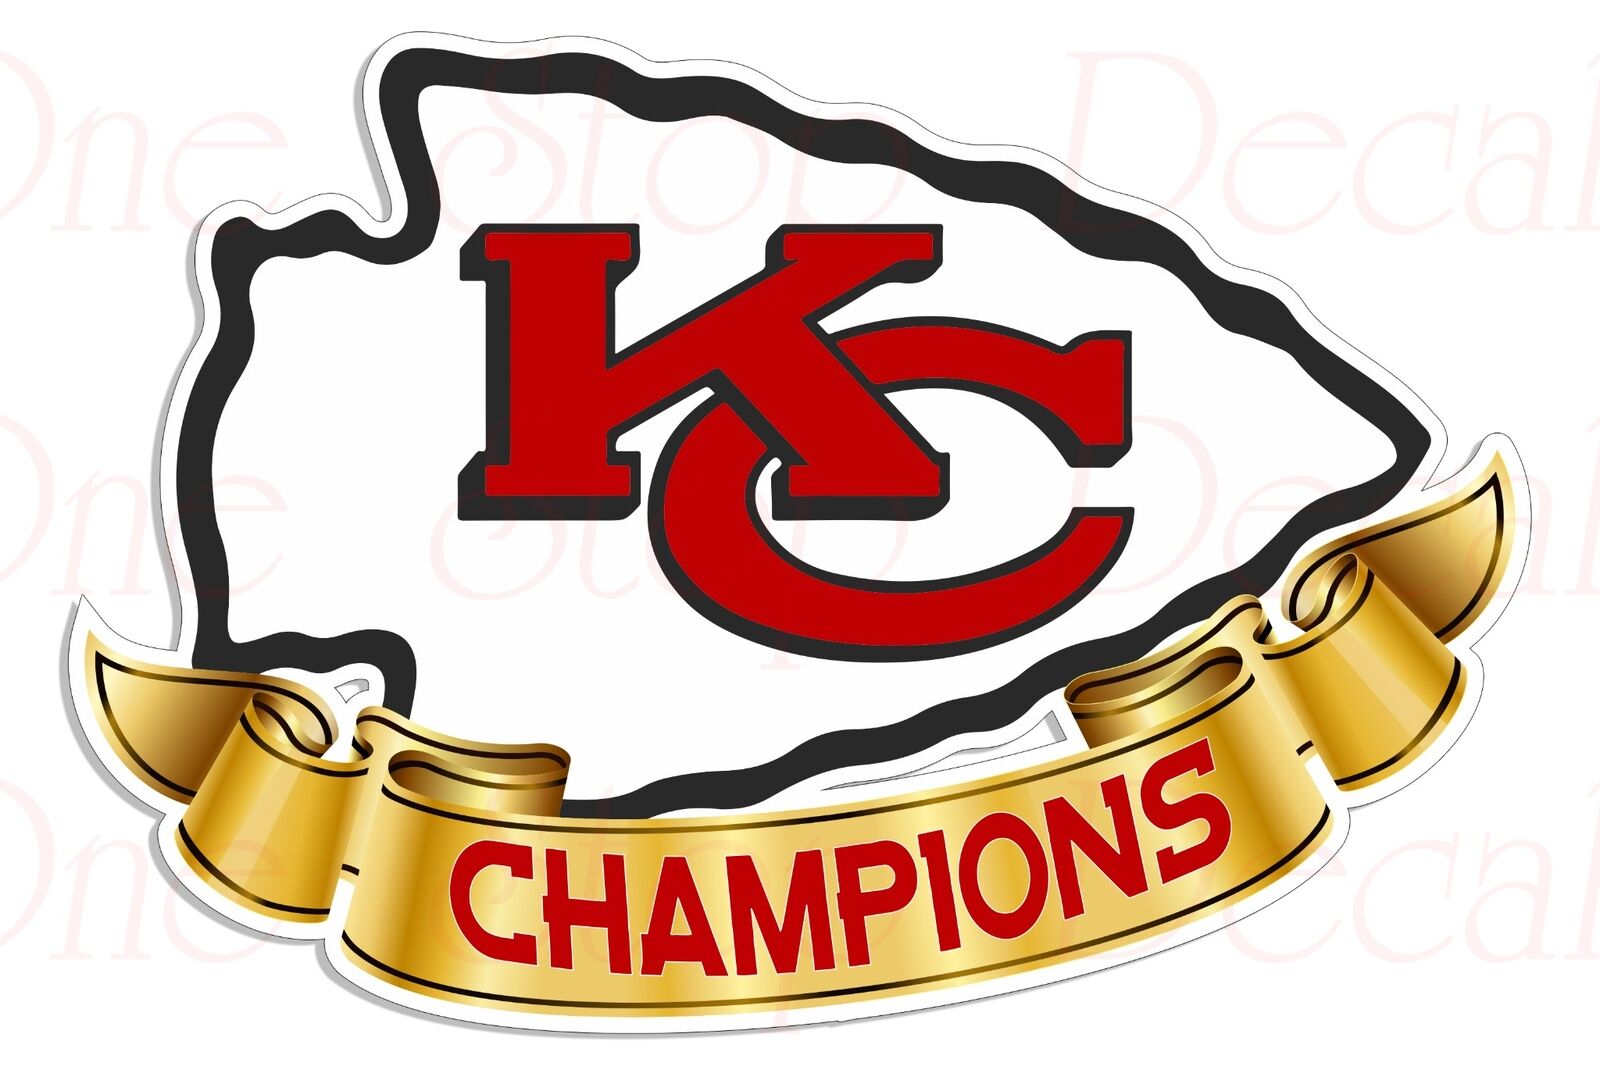 Kansas City Chiefs Champions V1 sport fan decal sticker for car truck boat wall.